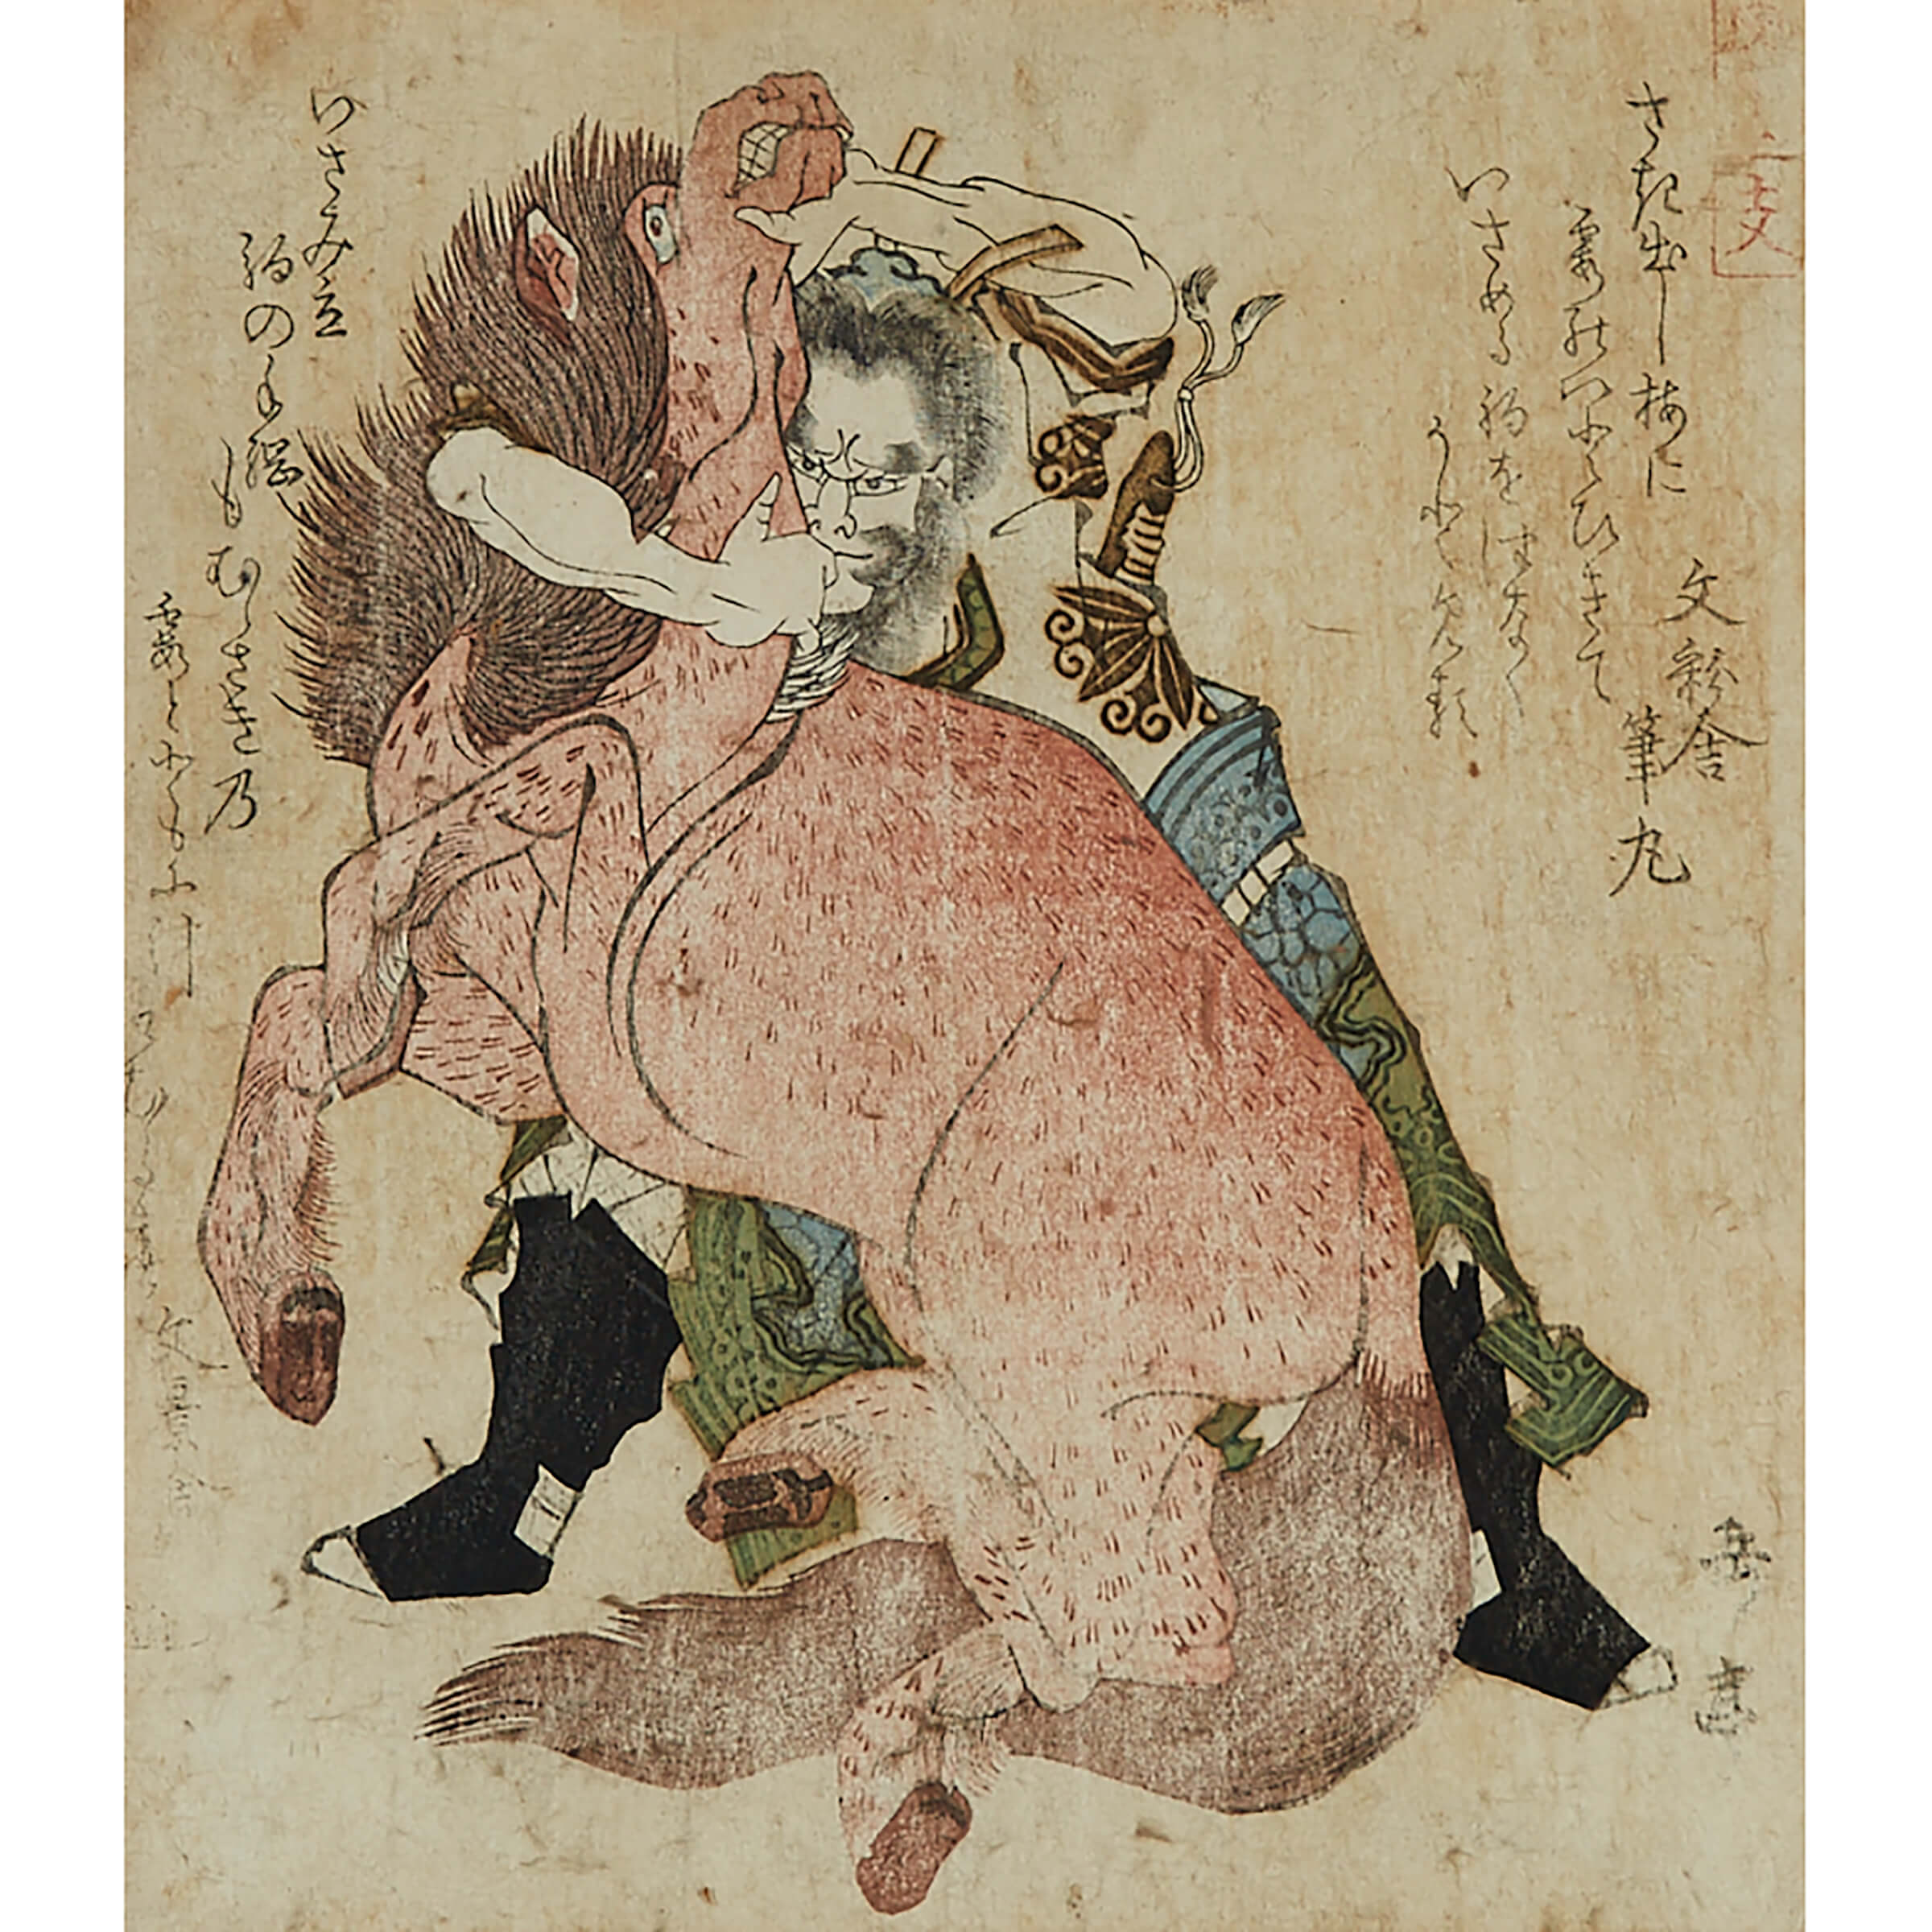 Yashima Gakutei (circa 1786-1868), Man Wrestling a Horse